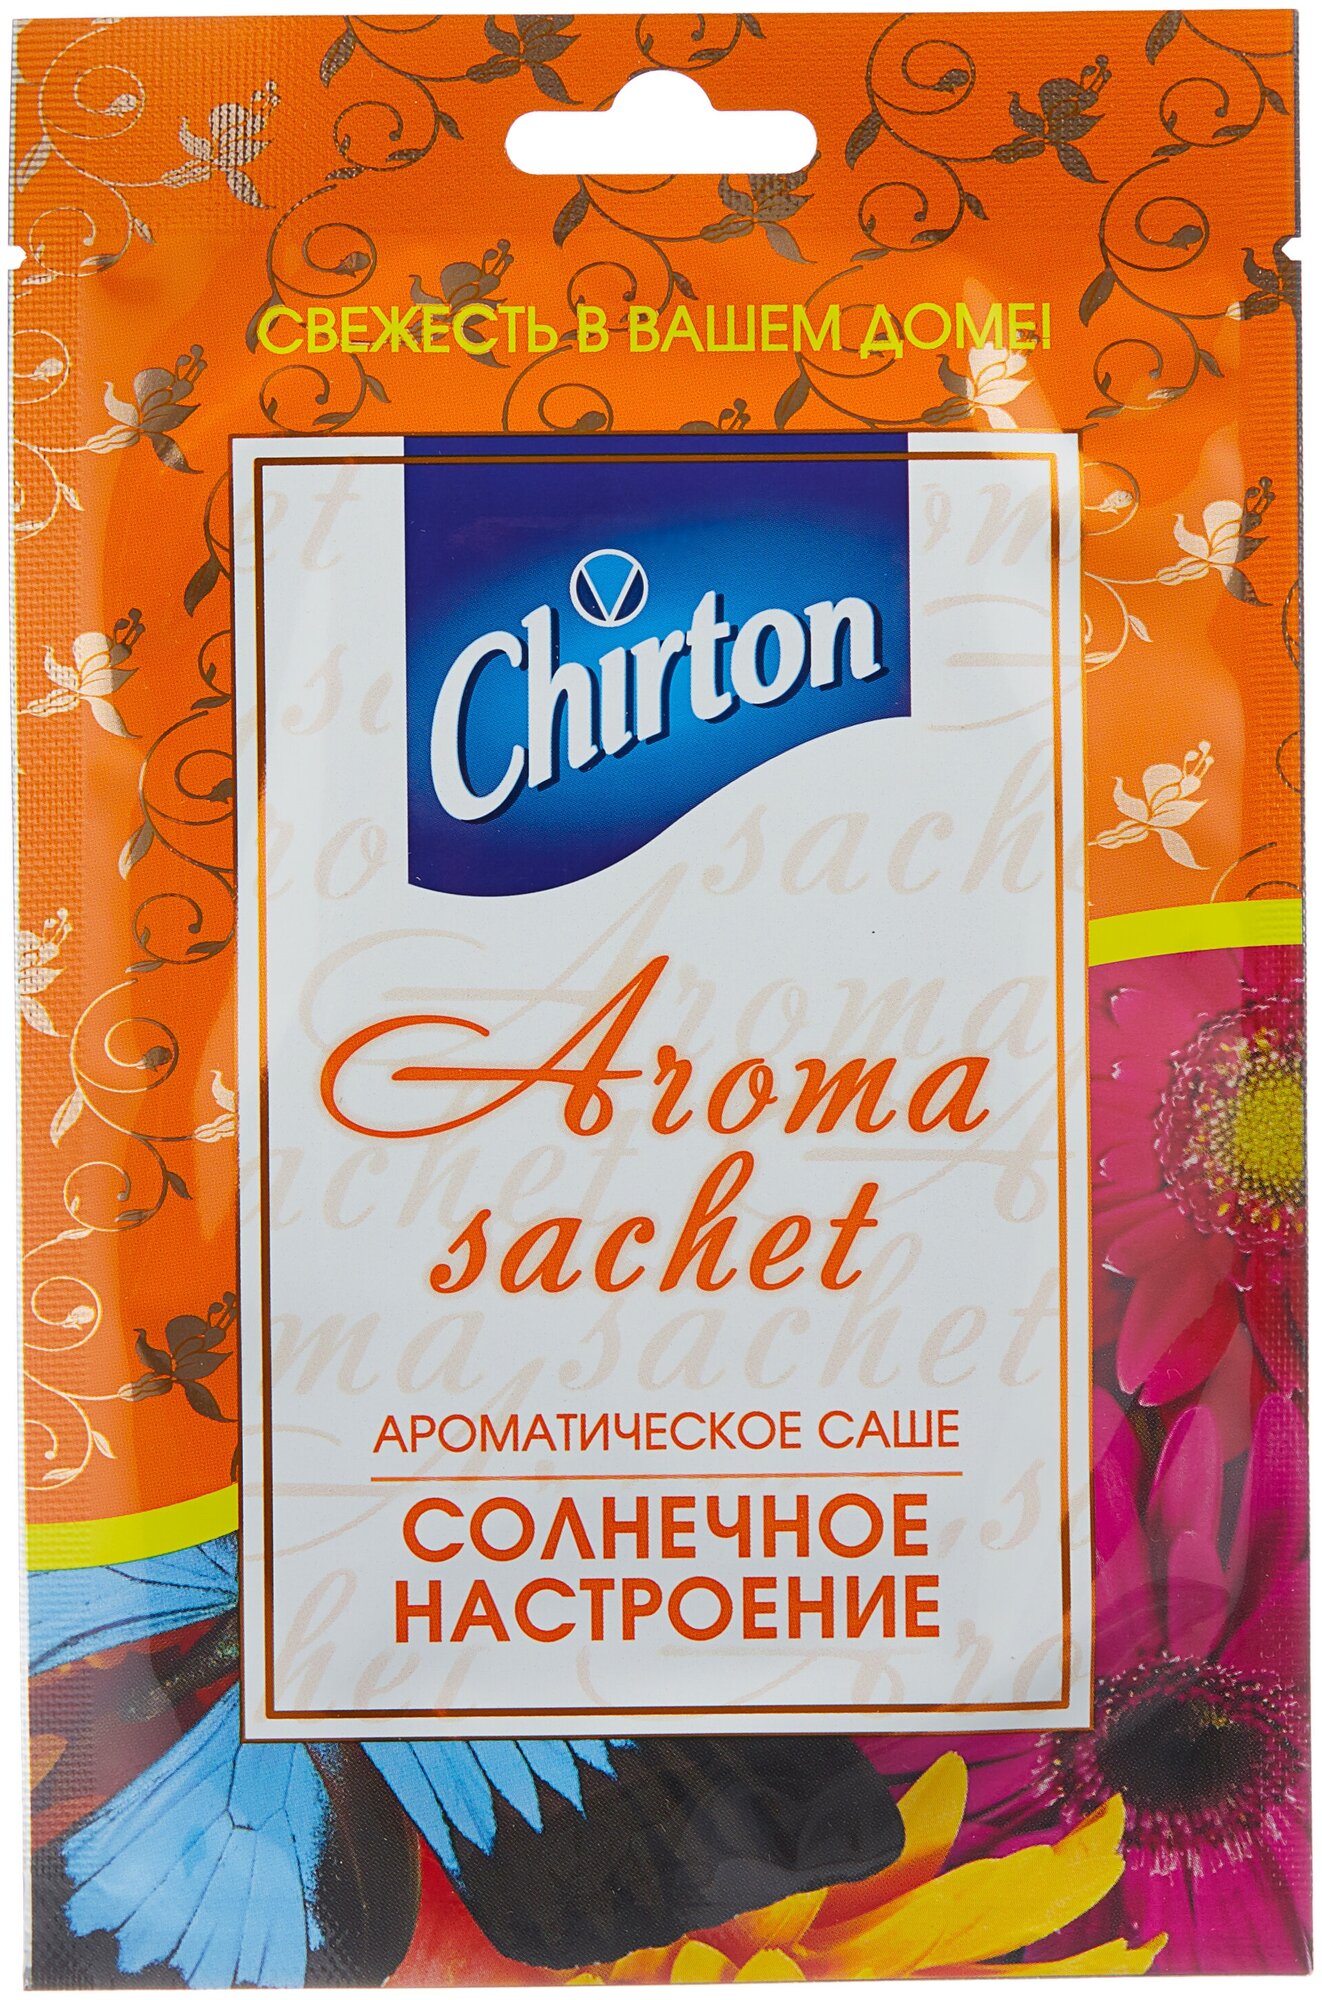 Chirton саше Солнечное настроение, 15 гр 1 шт.